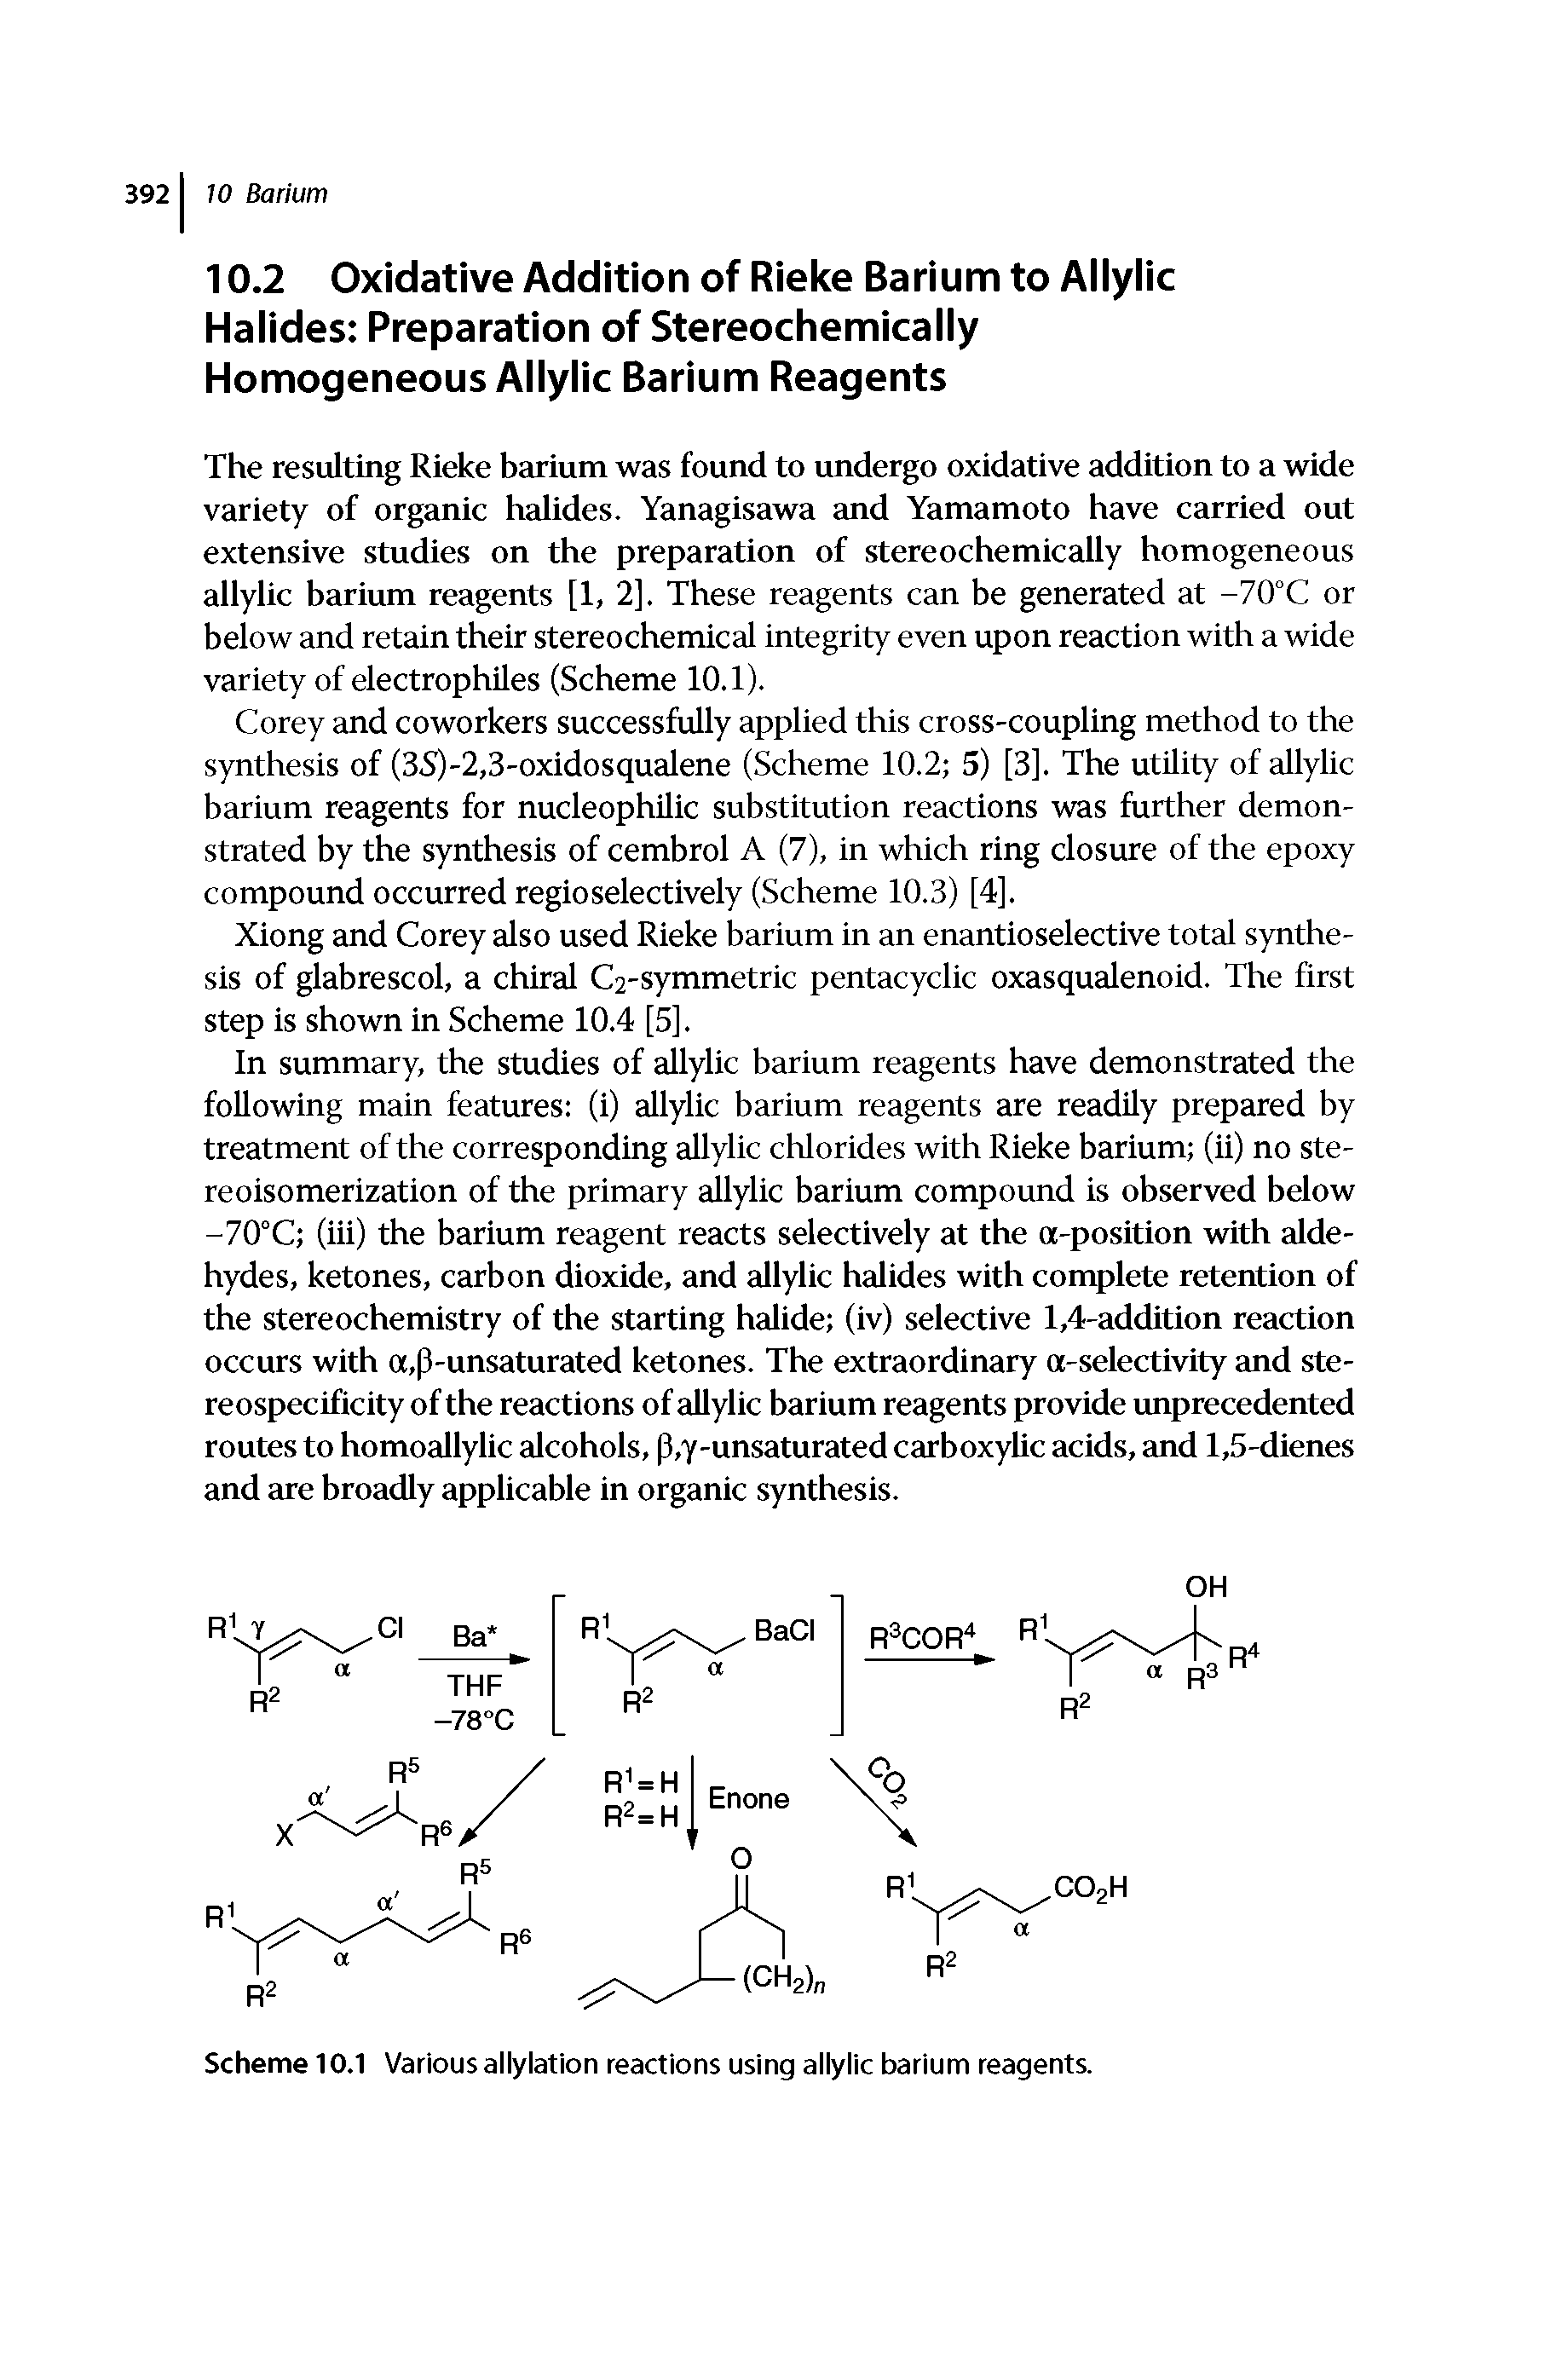 Scheme 10.1 Various allylation reactions using allylic barium reagents.